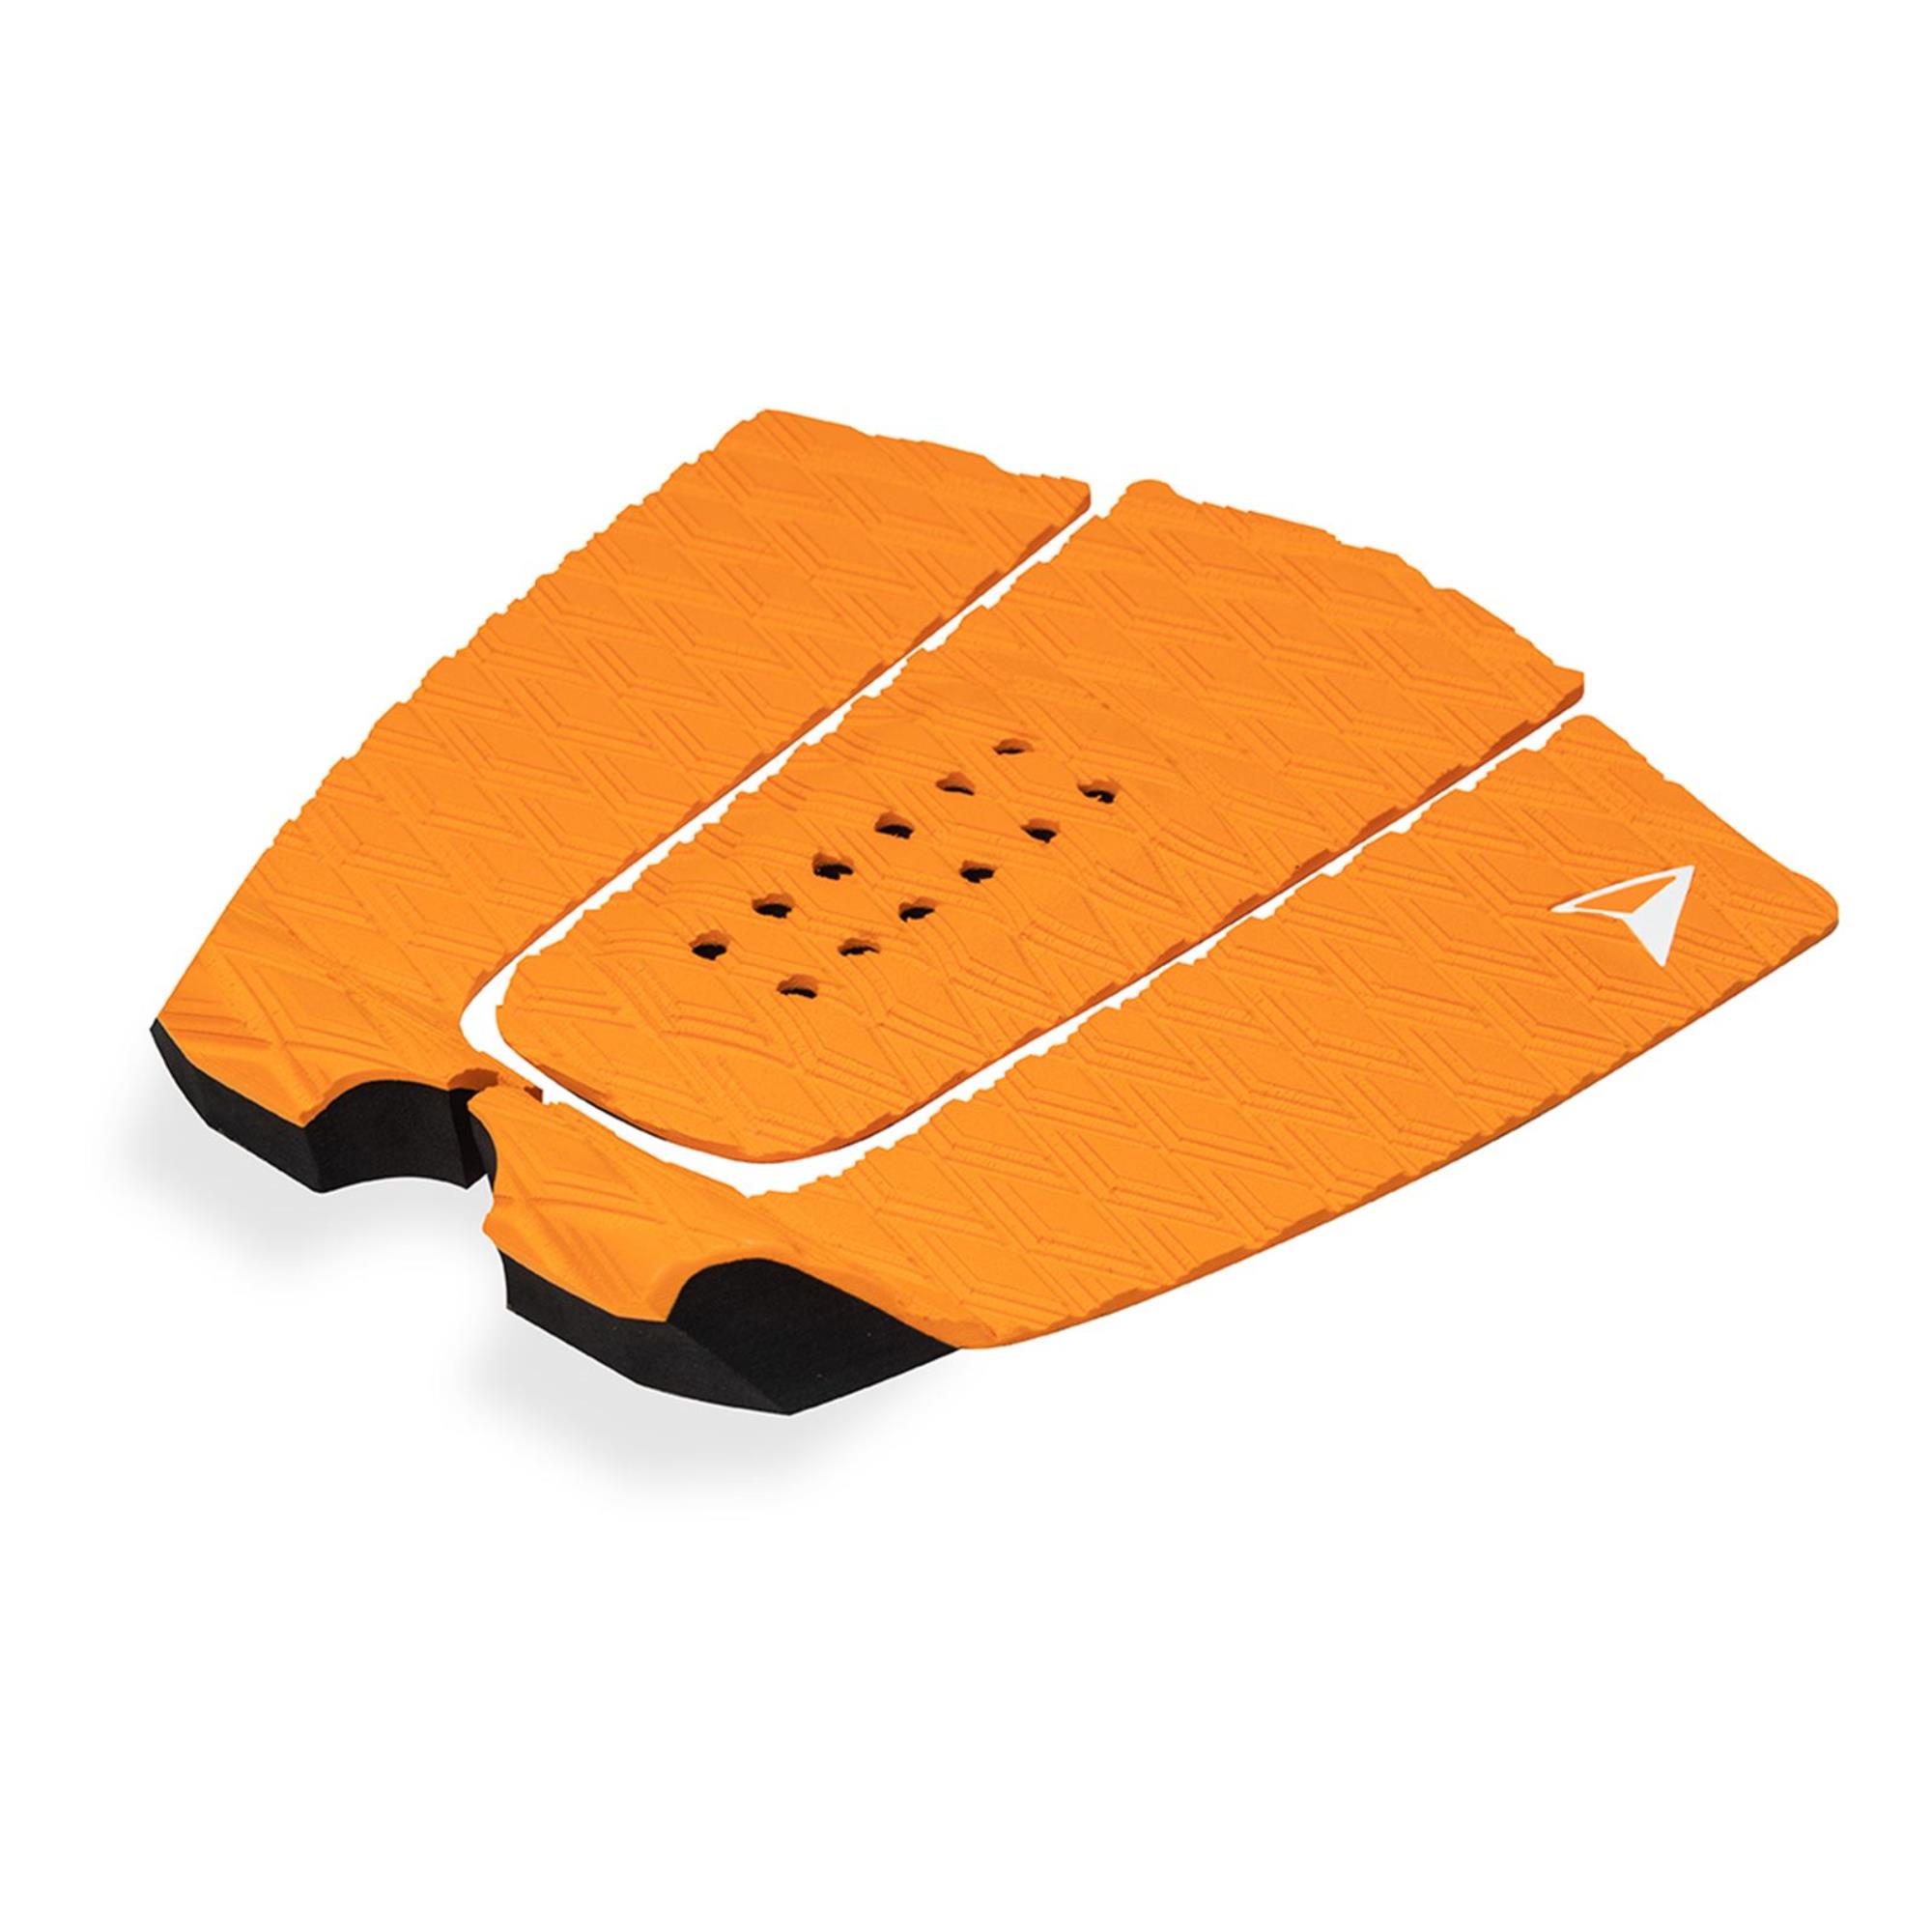 ROAM Footpad Deck Grip Traction Pad 3-tlg + Orange gelocht